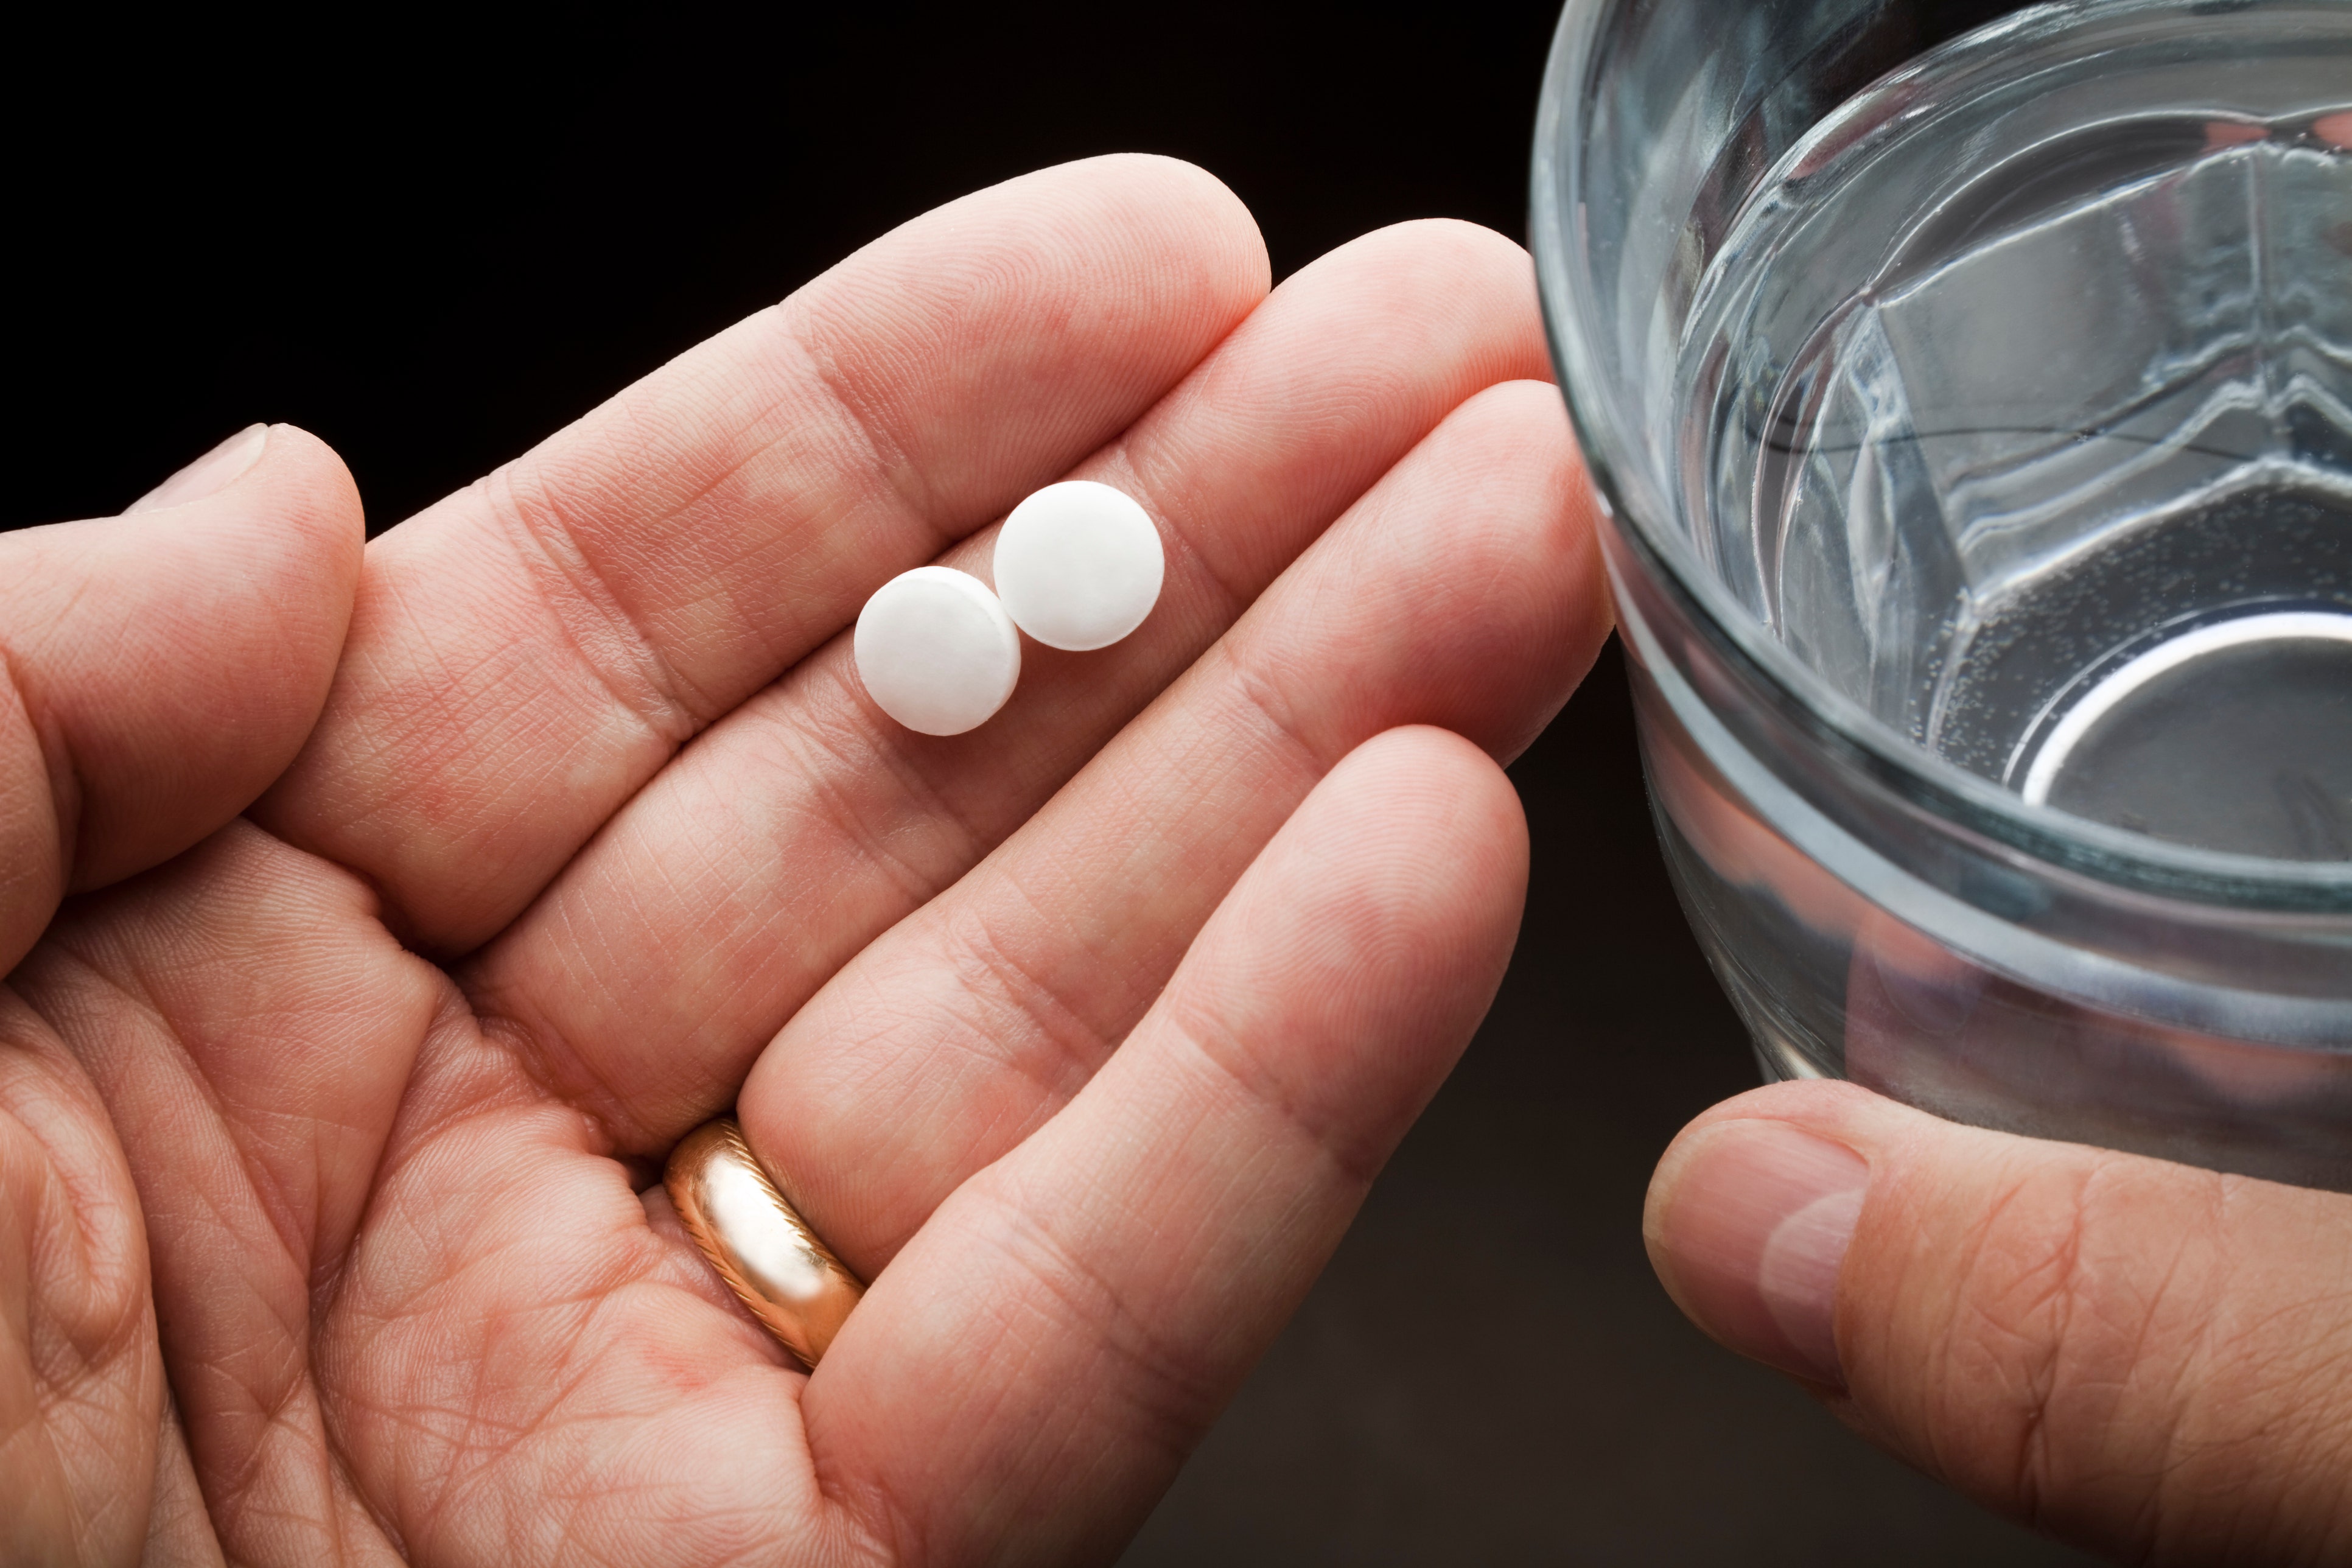 Low-dose aspirin cuts severe coronavirus risk, study suggests